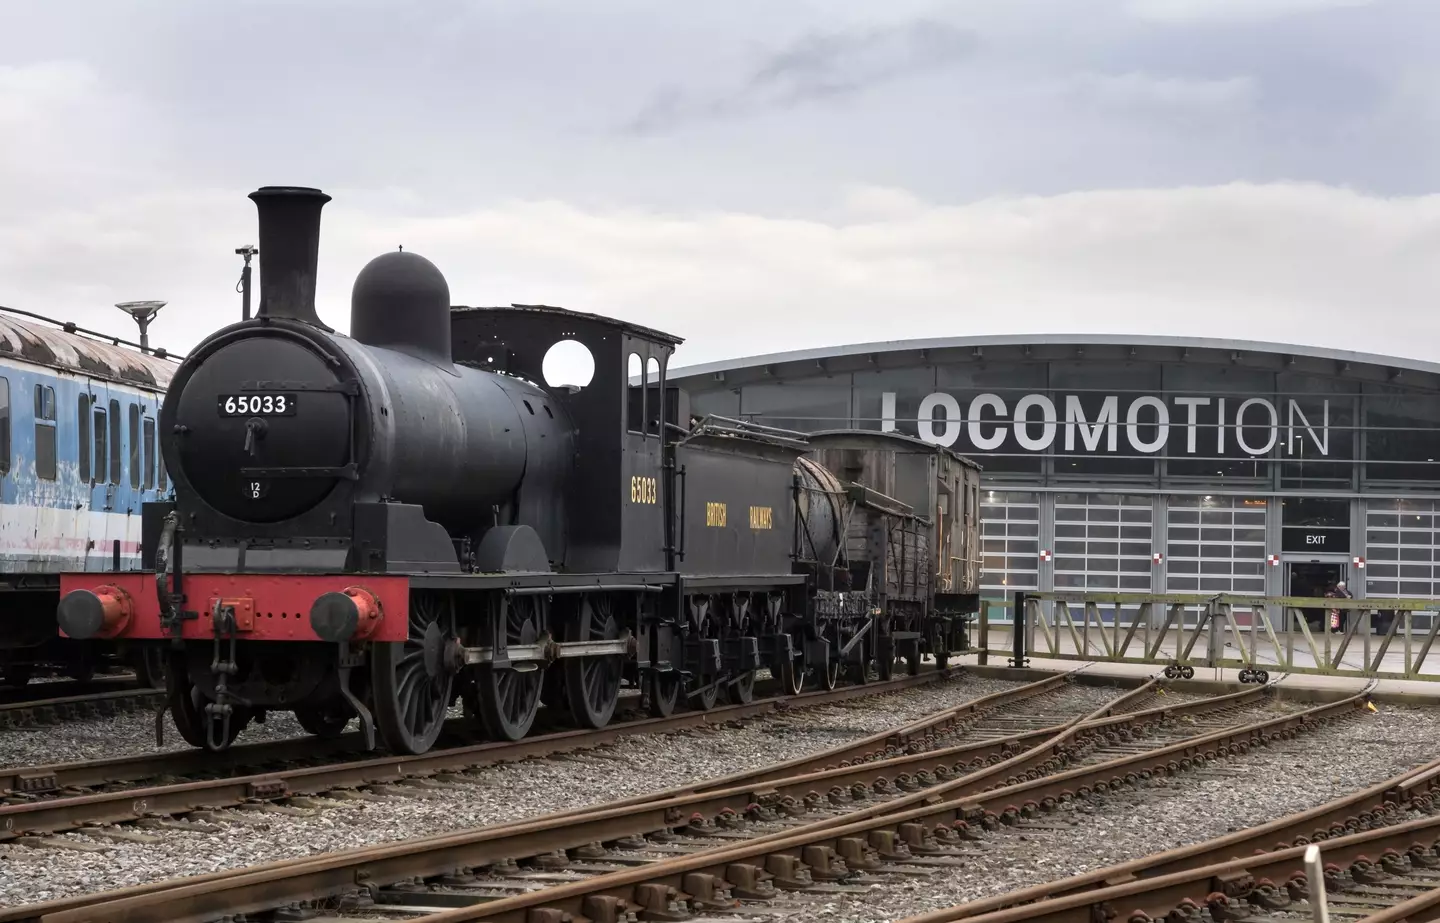 Shildon is home to railway museum Locomotion.